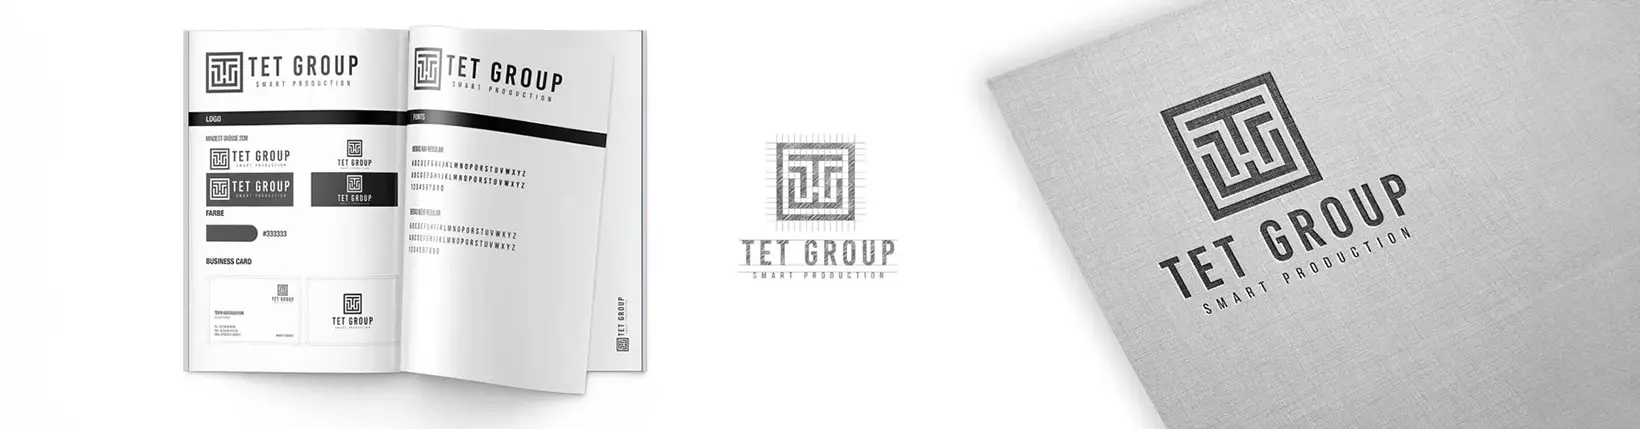 tet group brand identity manual